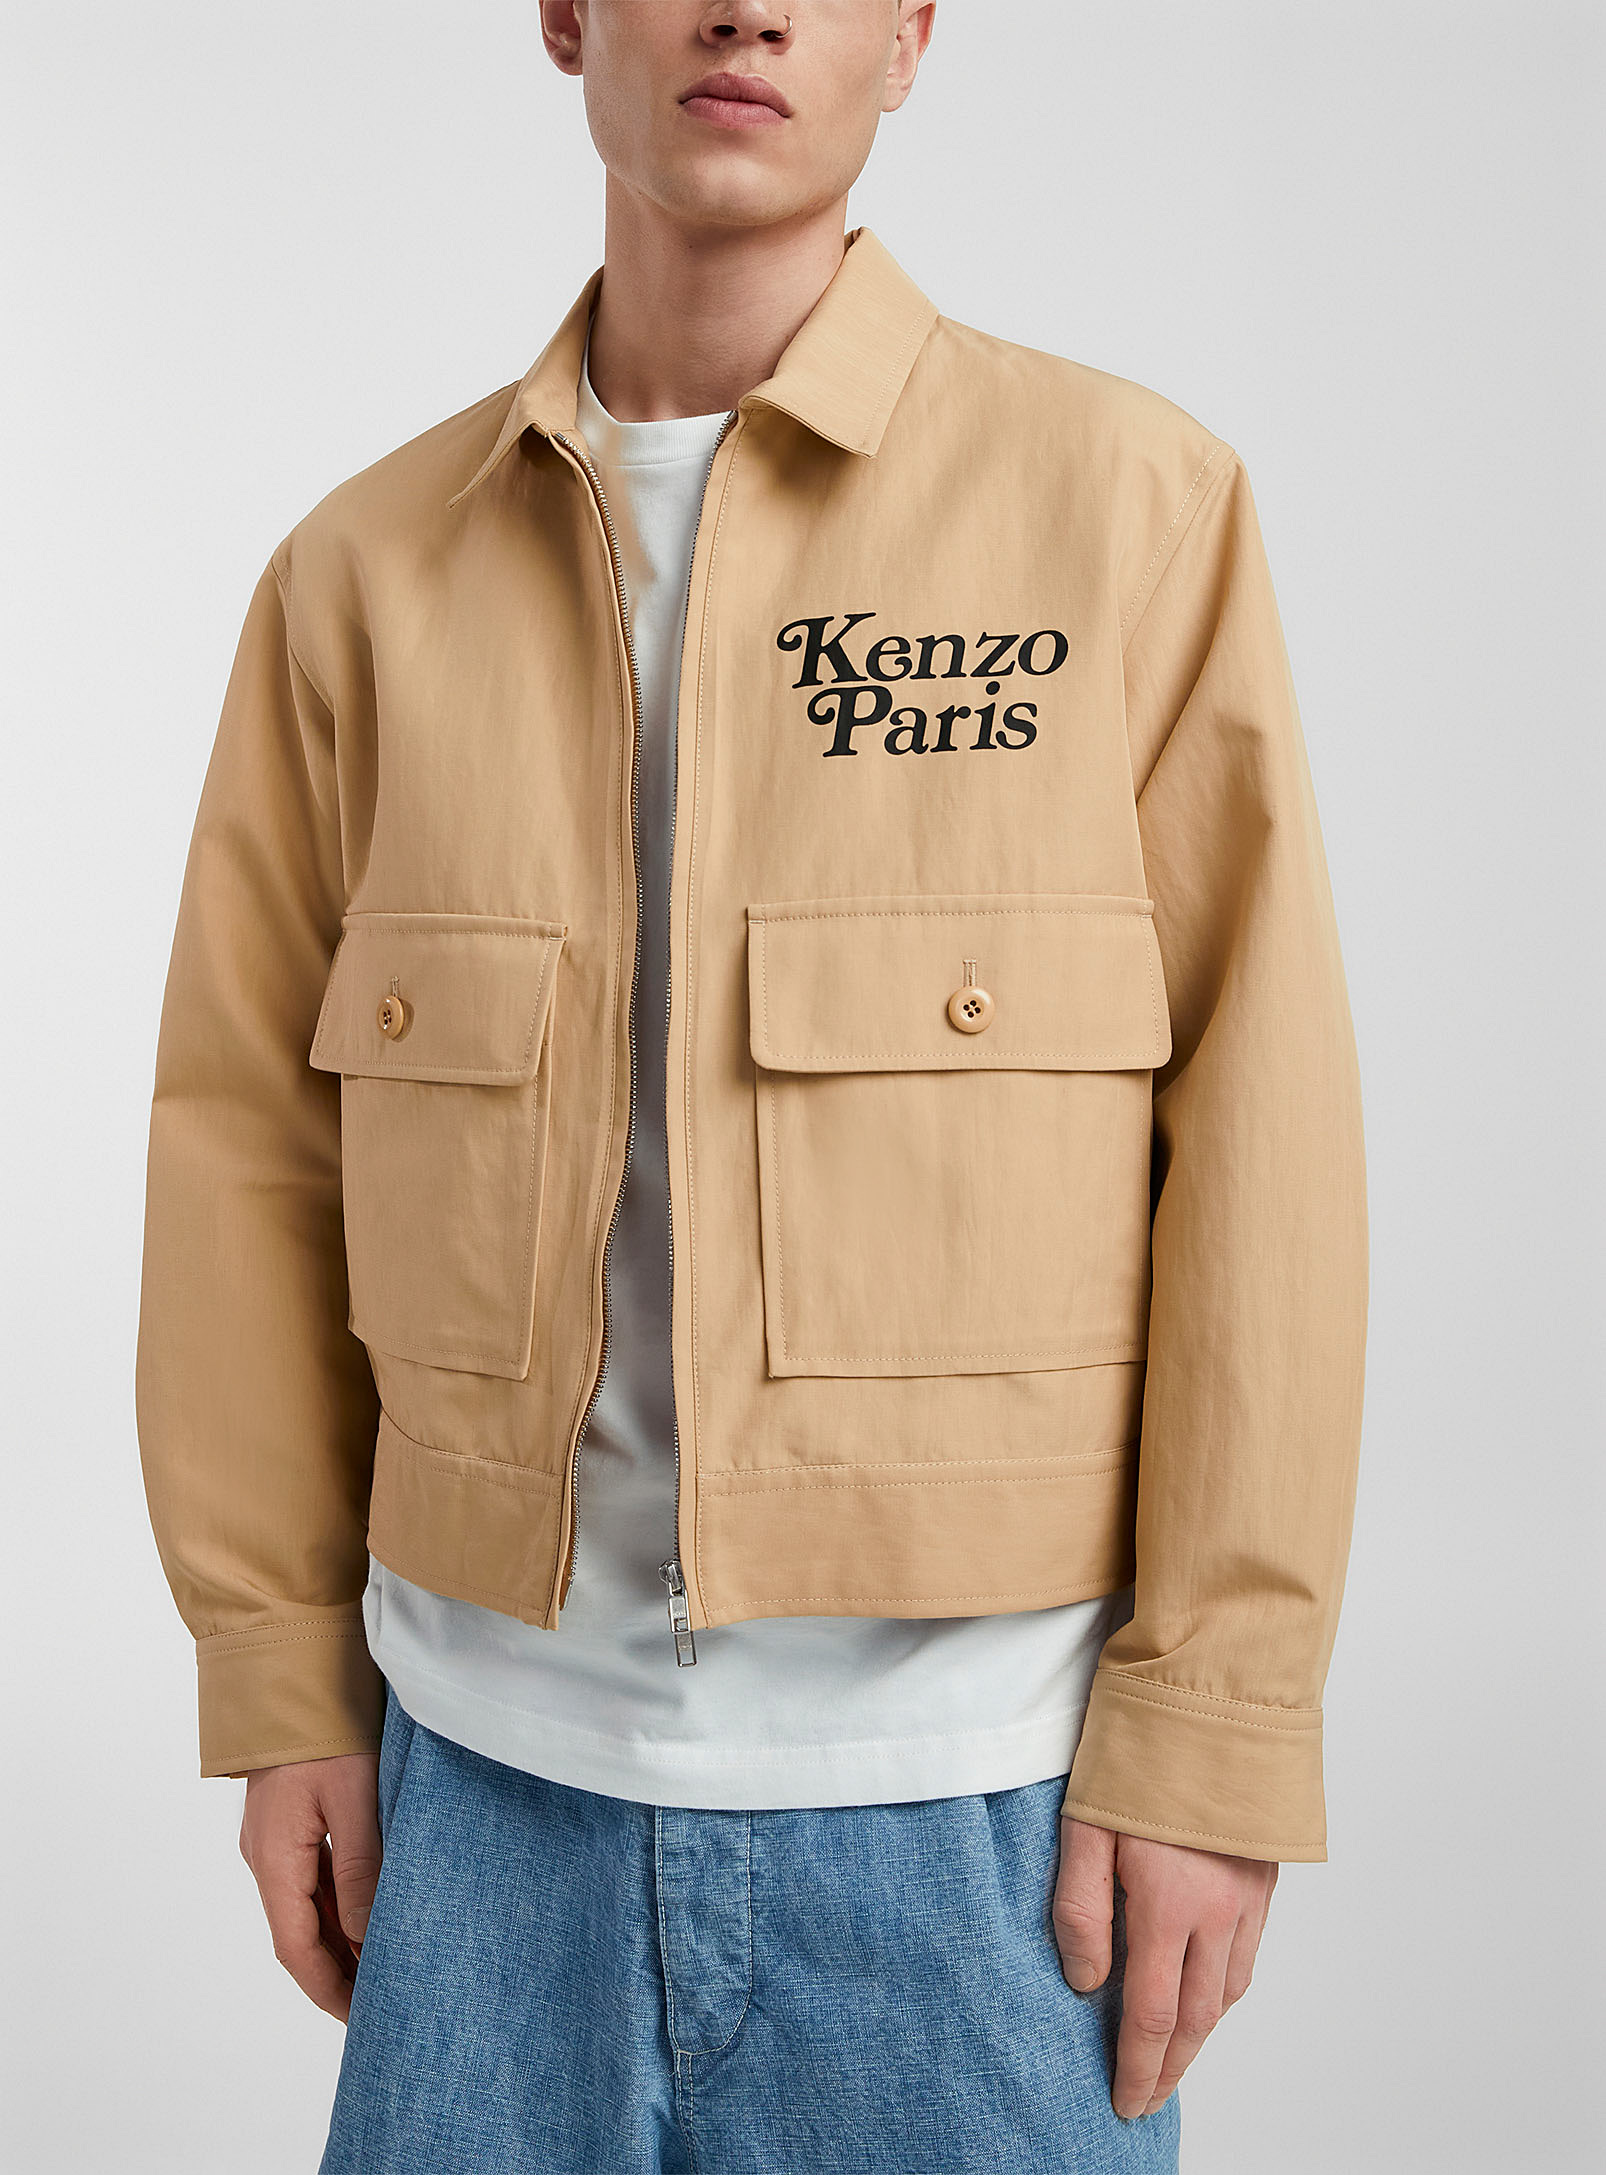 Kenzo - La veste courte By Verdy